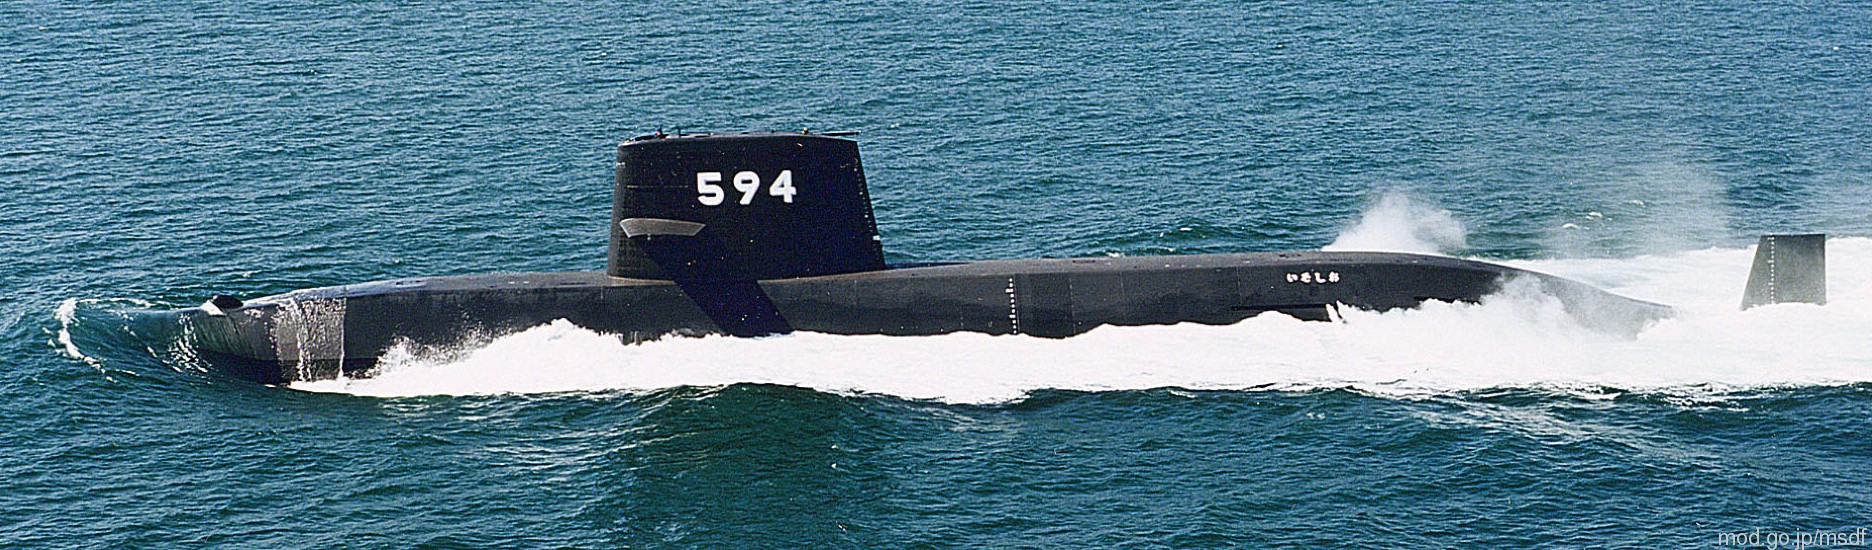 ss-594 jds isoshio oyashio class attack submarine japan maritime self defense force jmsdf 05